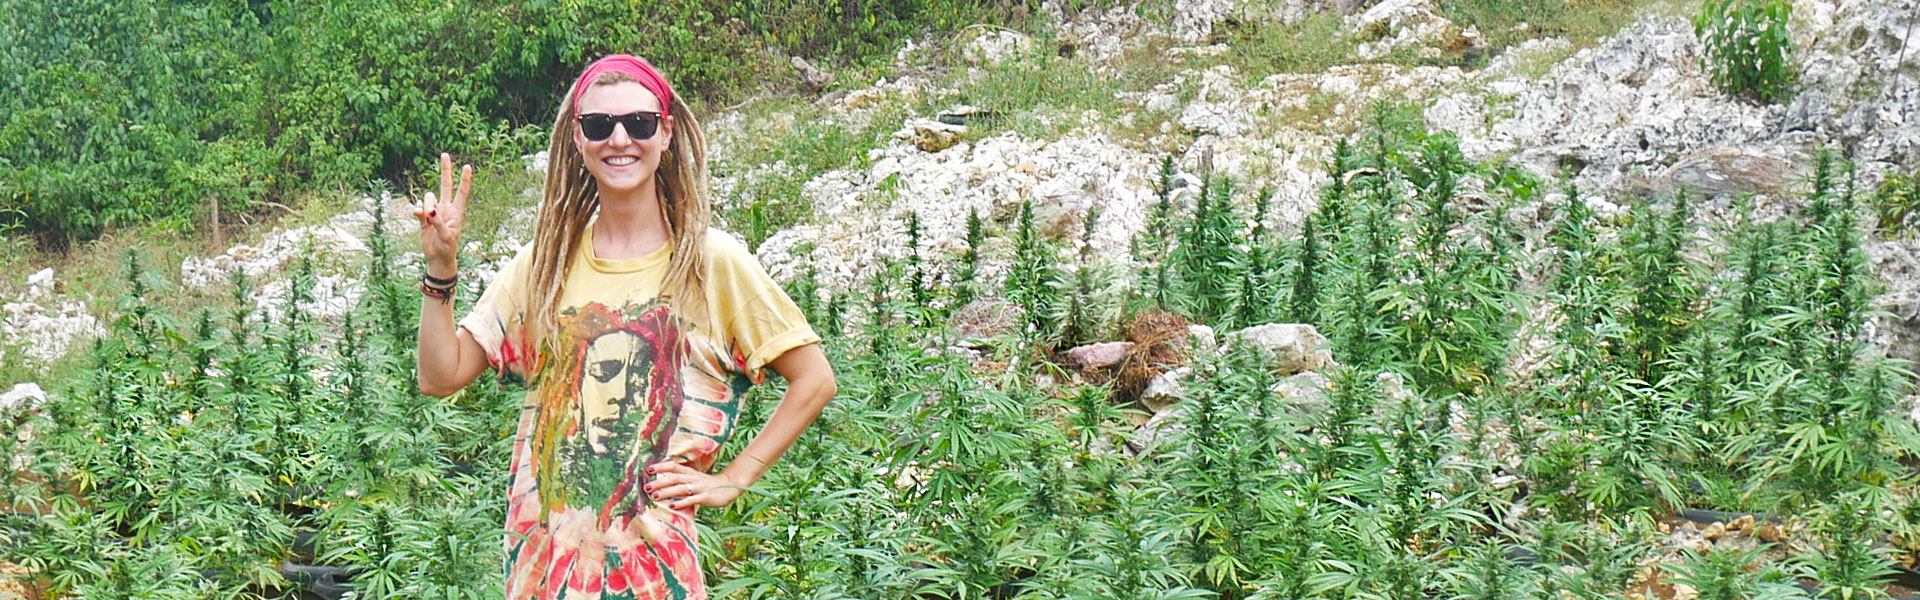 Rasta girl at weed farm near Negril, Jamaica